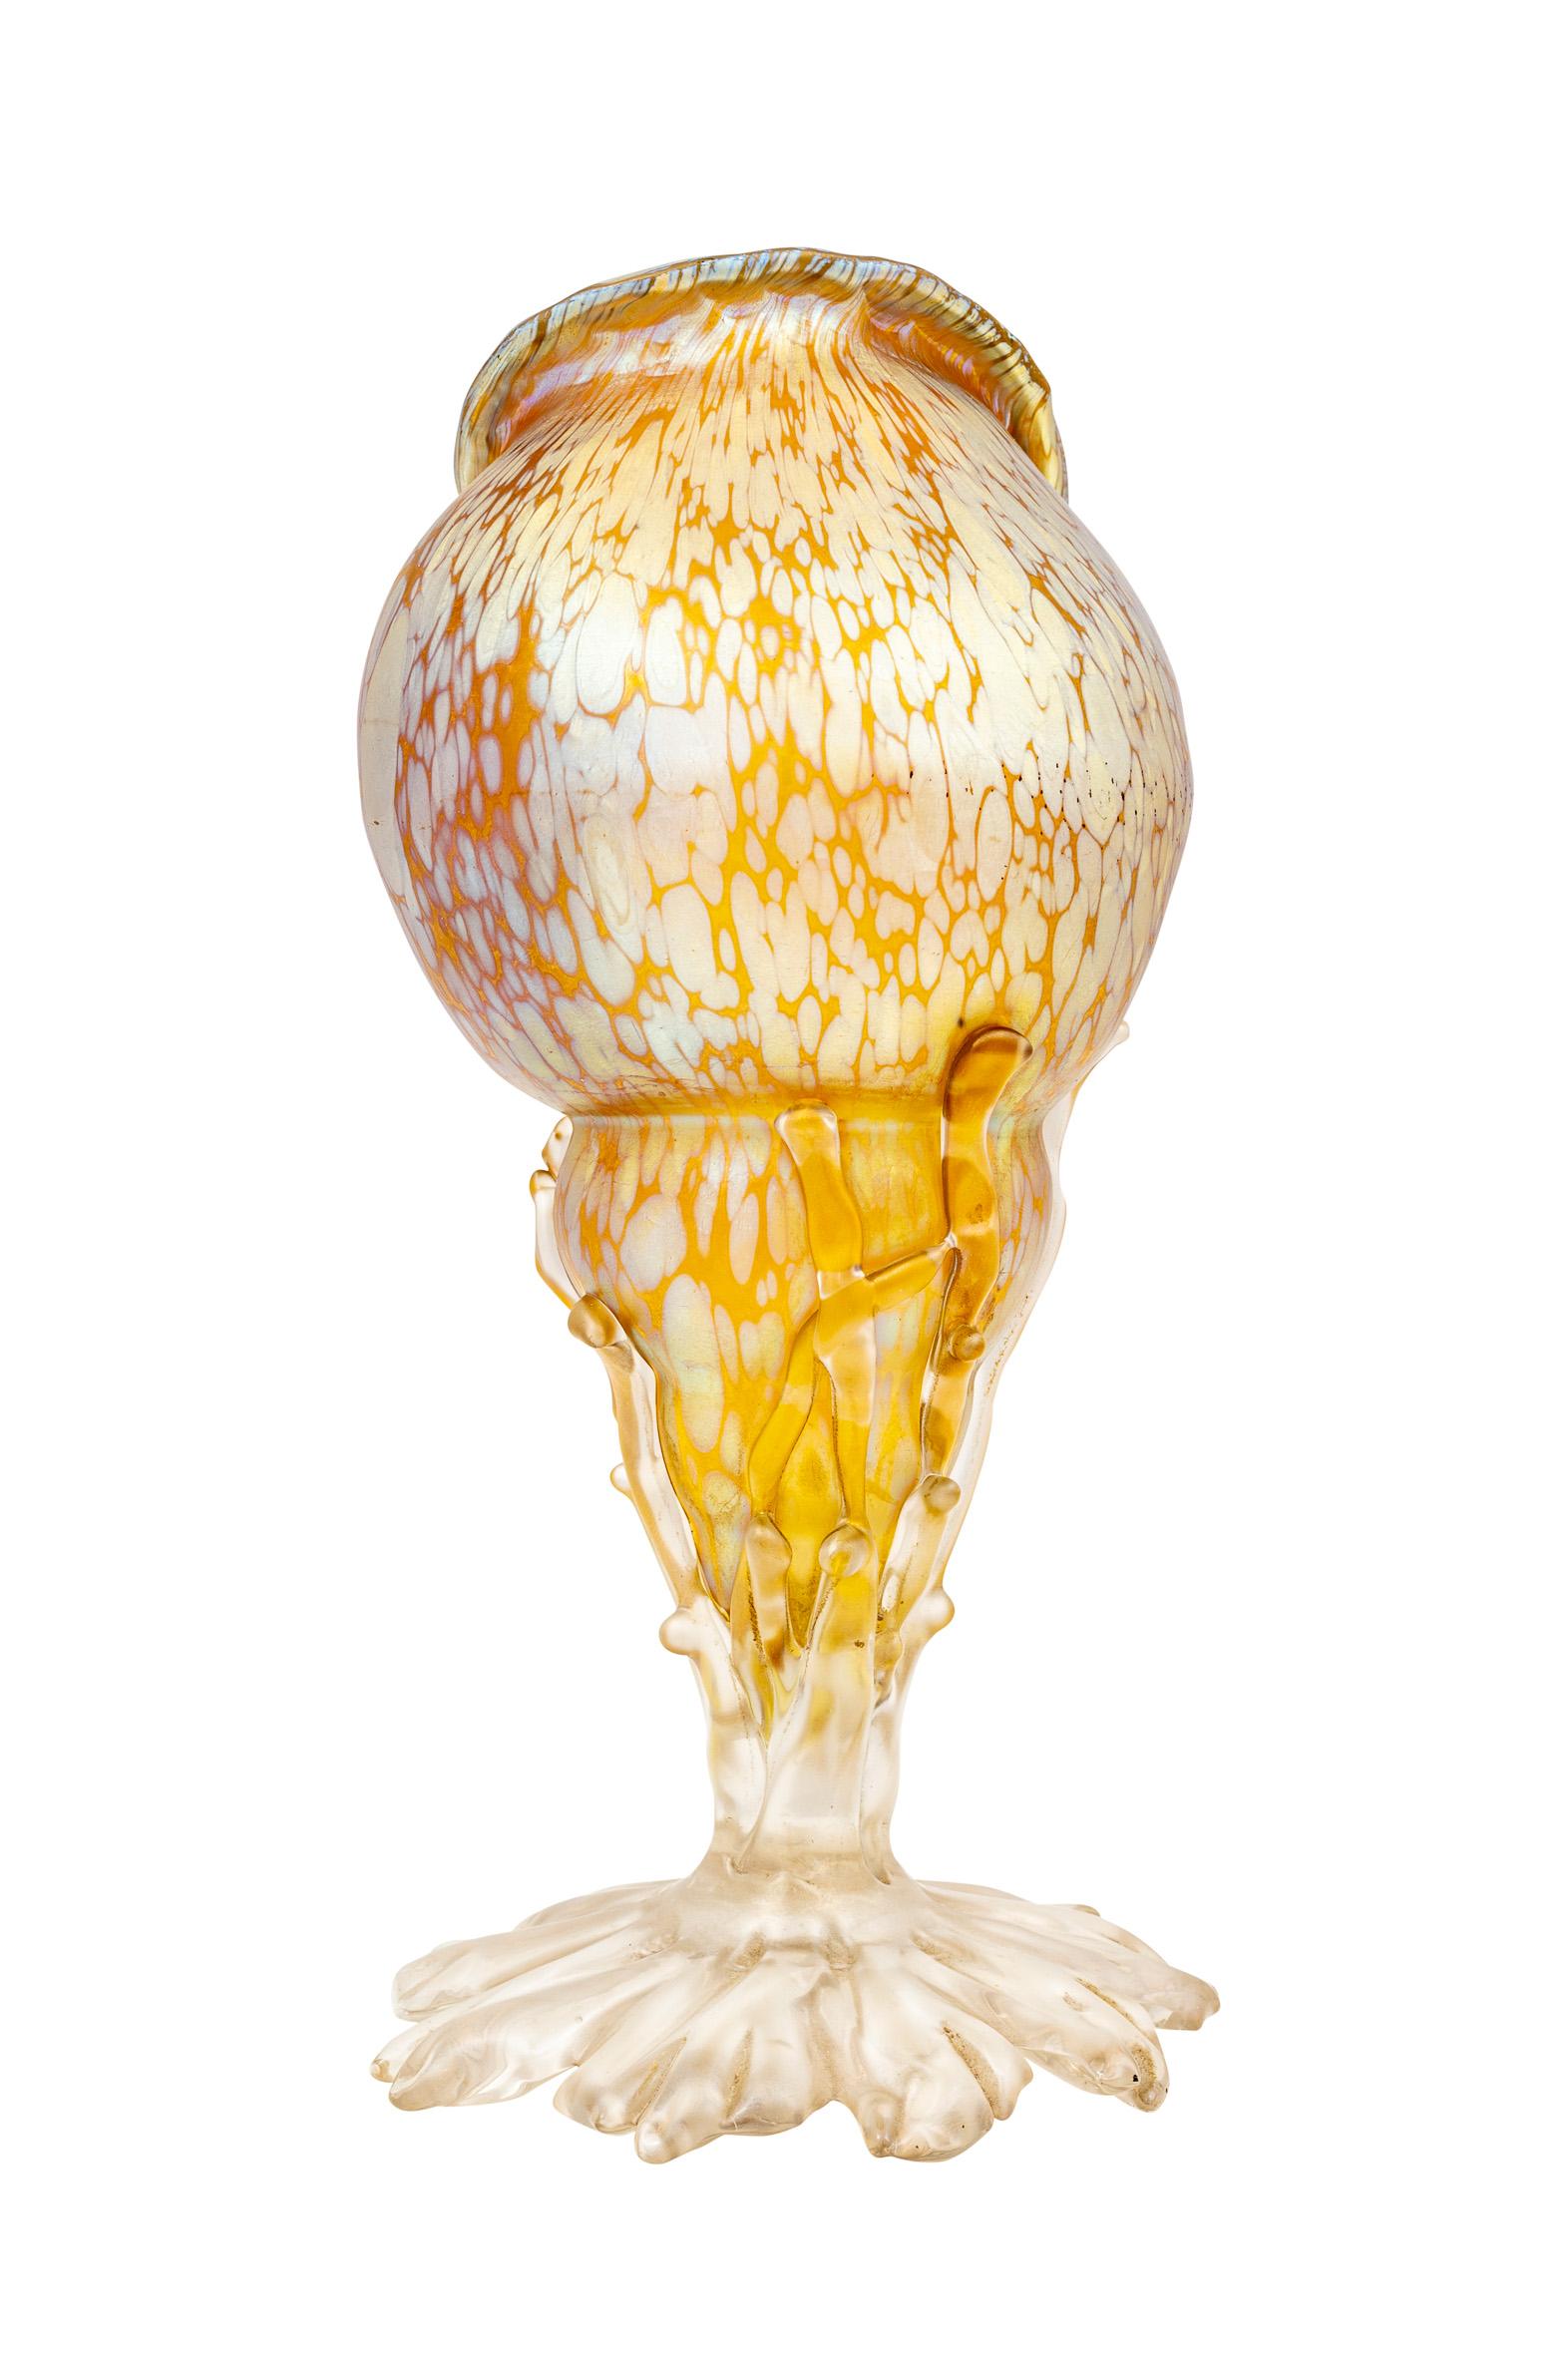 Hand-Crafted Conch Shell Vase Iridescent Handmade Loetz Austria Jugendstil, circa 1900